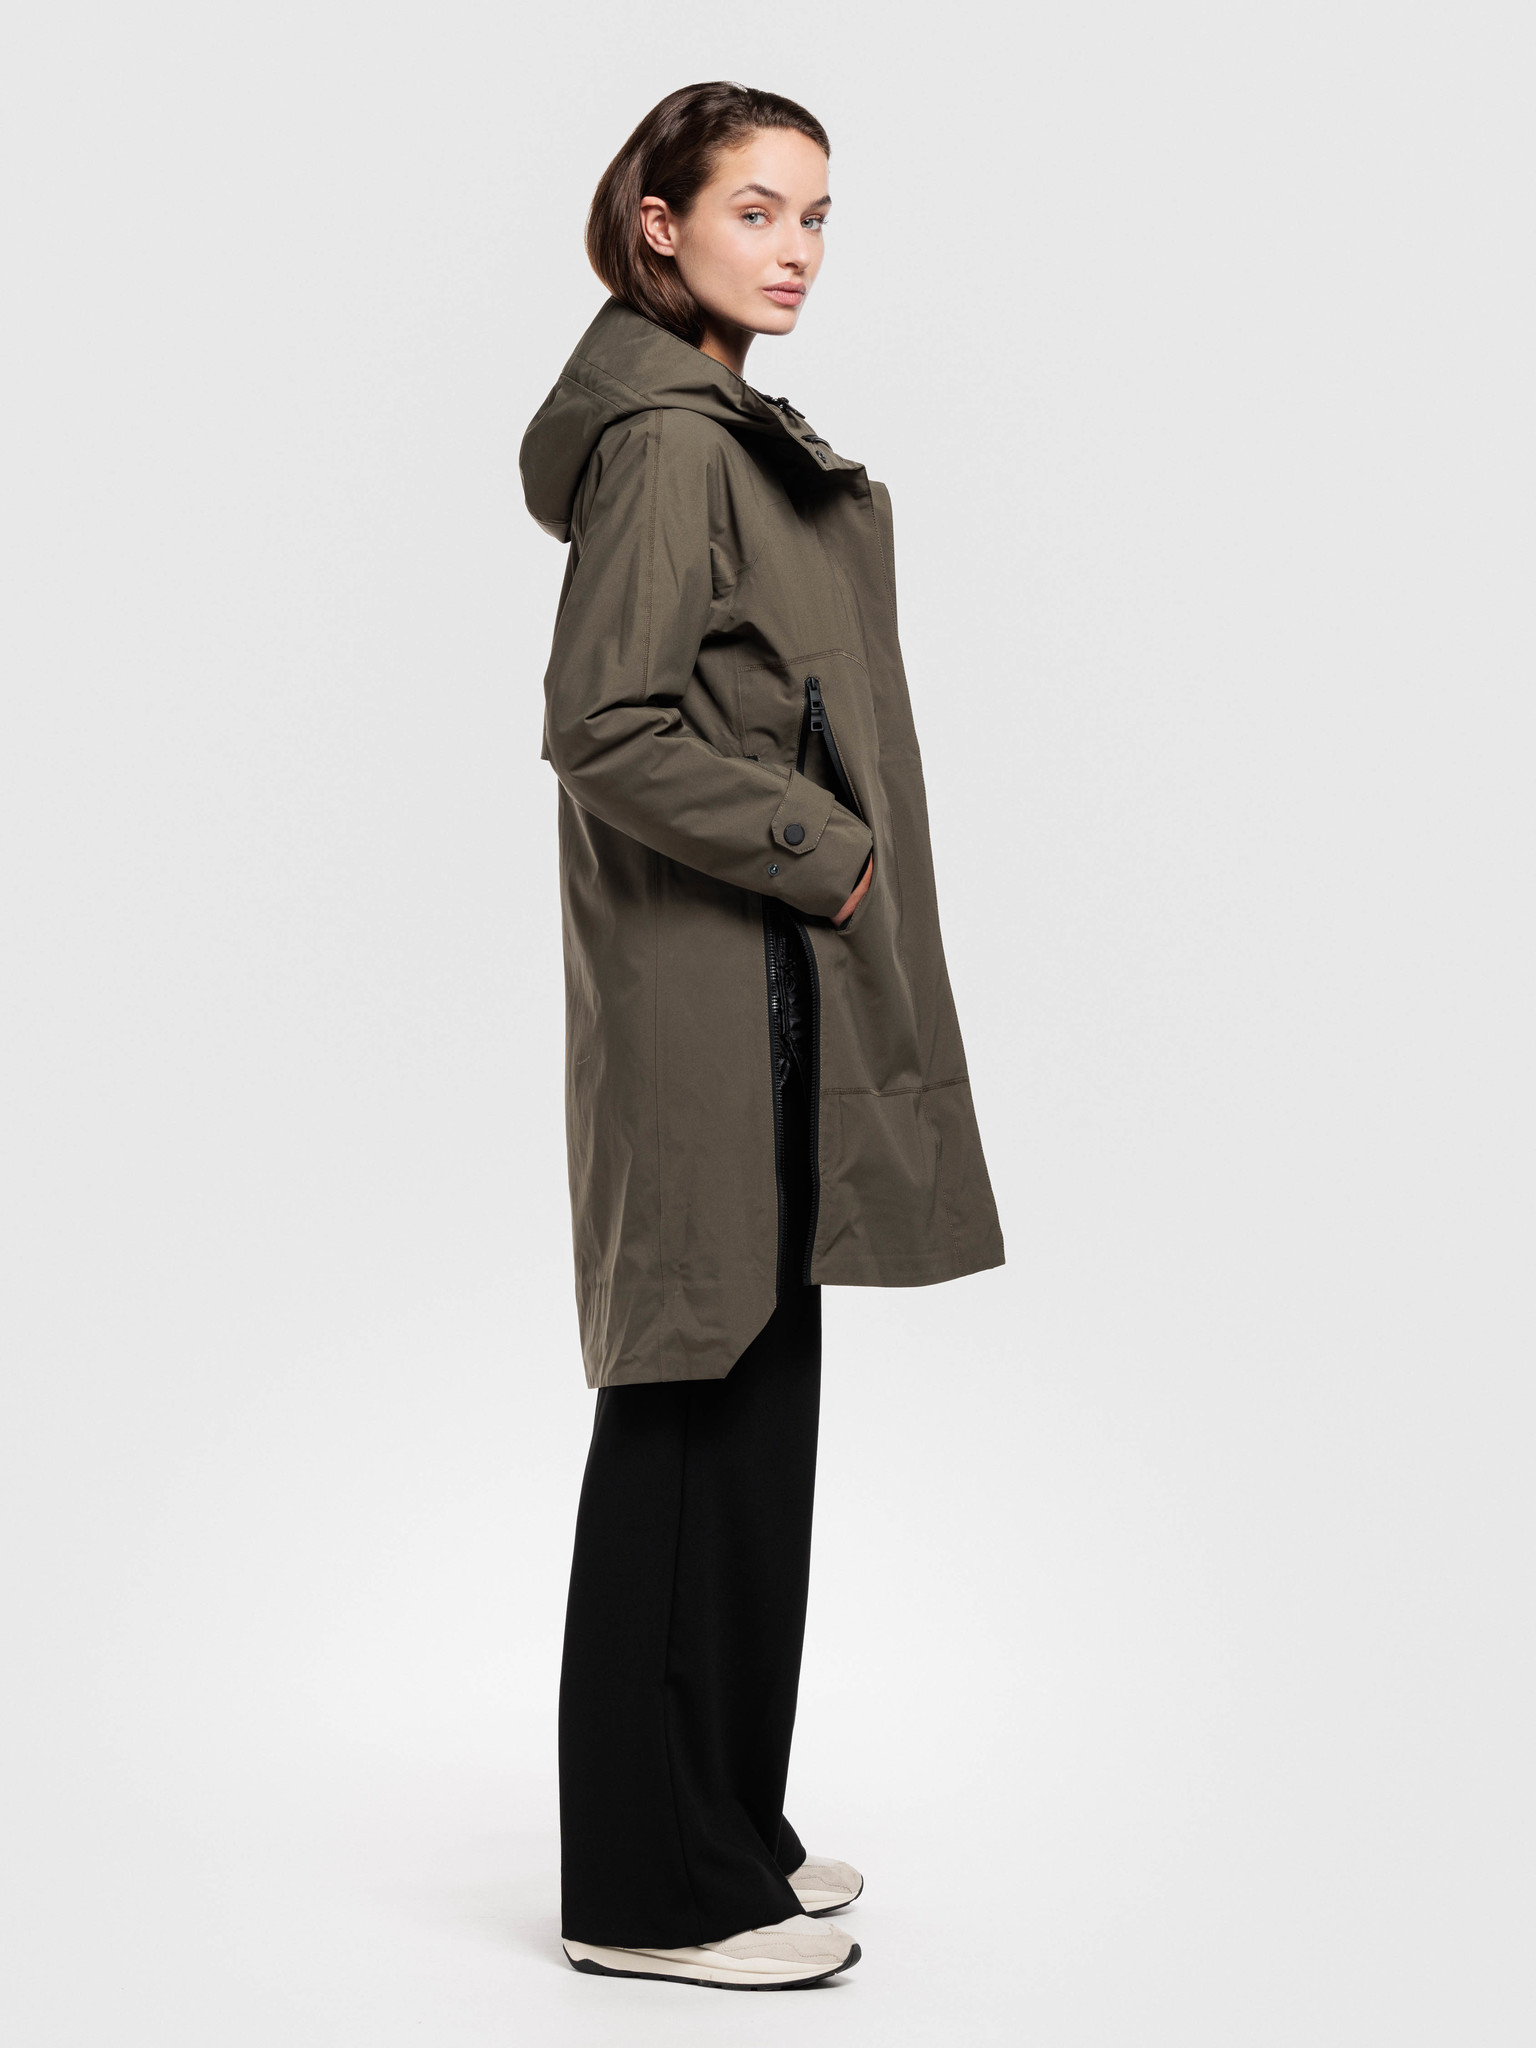 3 in 1 Raincoat with detachable inside jacket - Dark Olive - Creenstone